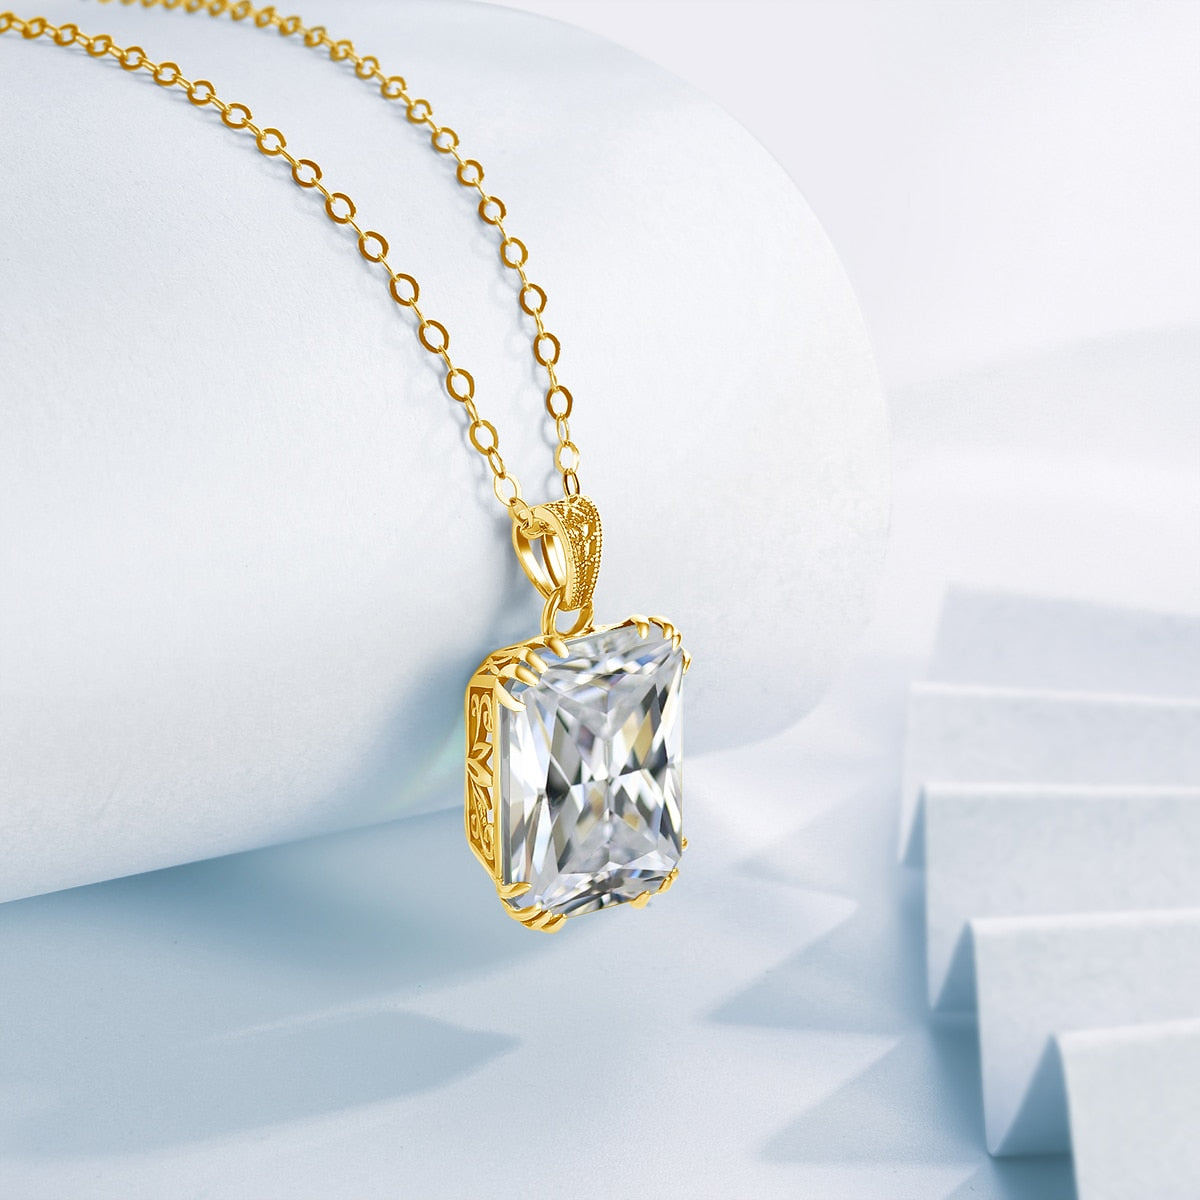 SILVERCHAKRA 925 Sterling Silver Necklace For Women Luxury Aquamarine Gemstones Necklace Pendant Fine Jewelry Filigree Design White Zircon 18K 45cm